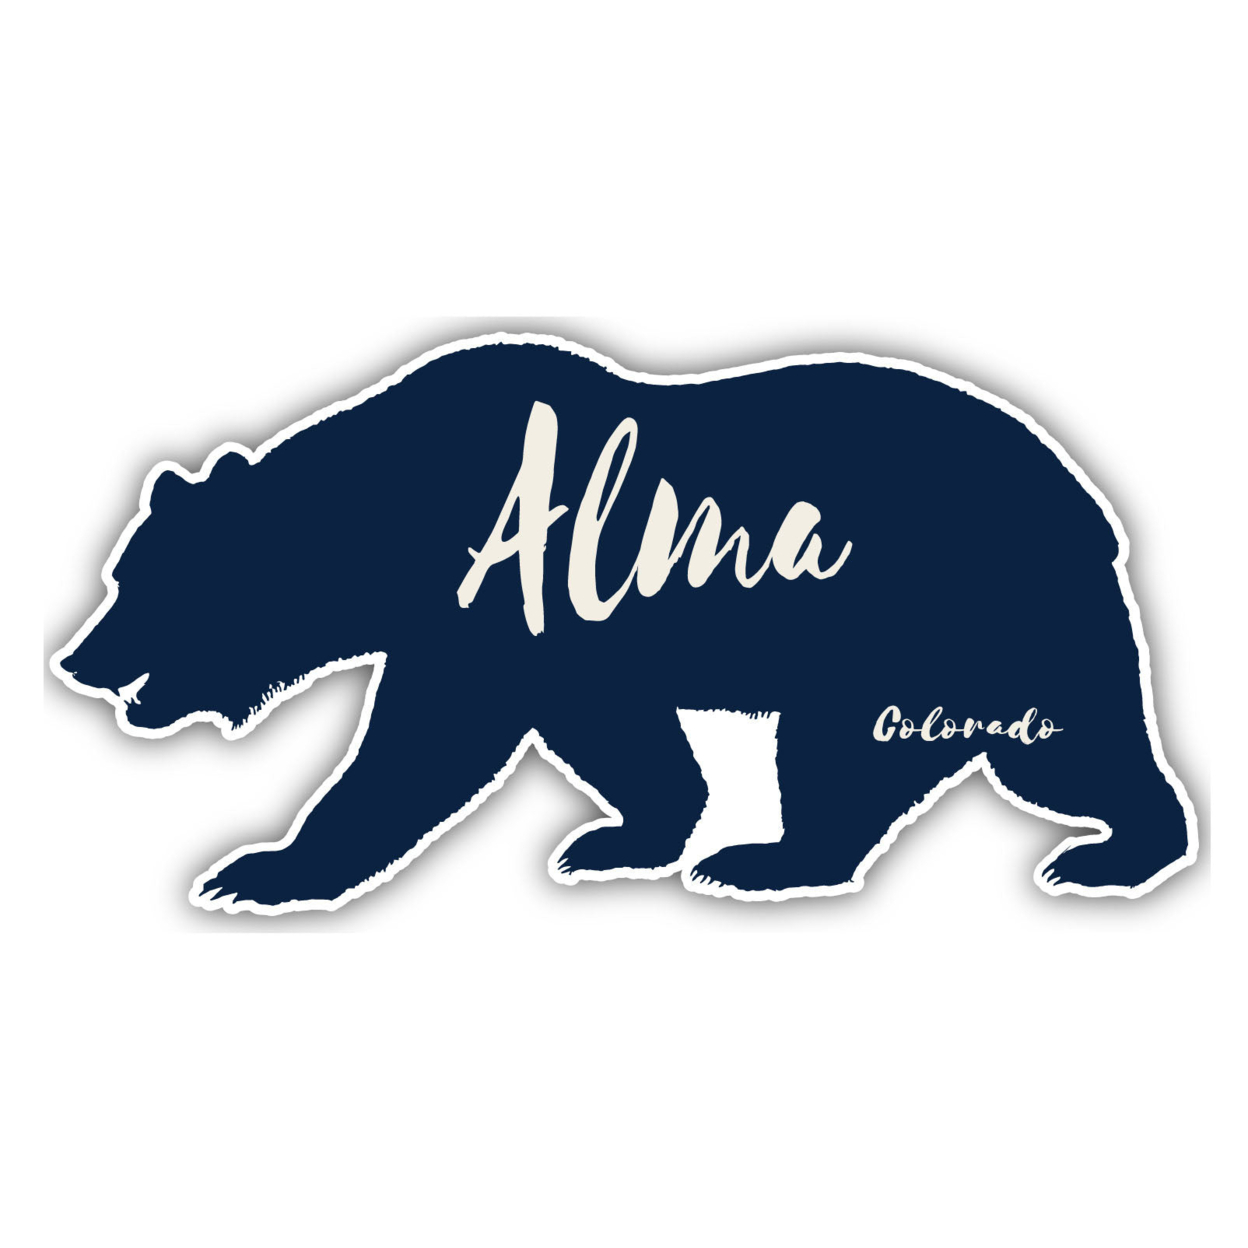 Alma Colorado Souvenir Decorative Stickers (Choose Theme And Size) - 4-Pack, 2-Inch, Tent